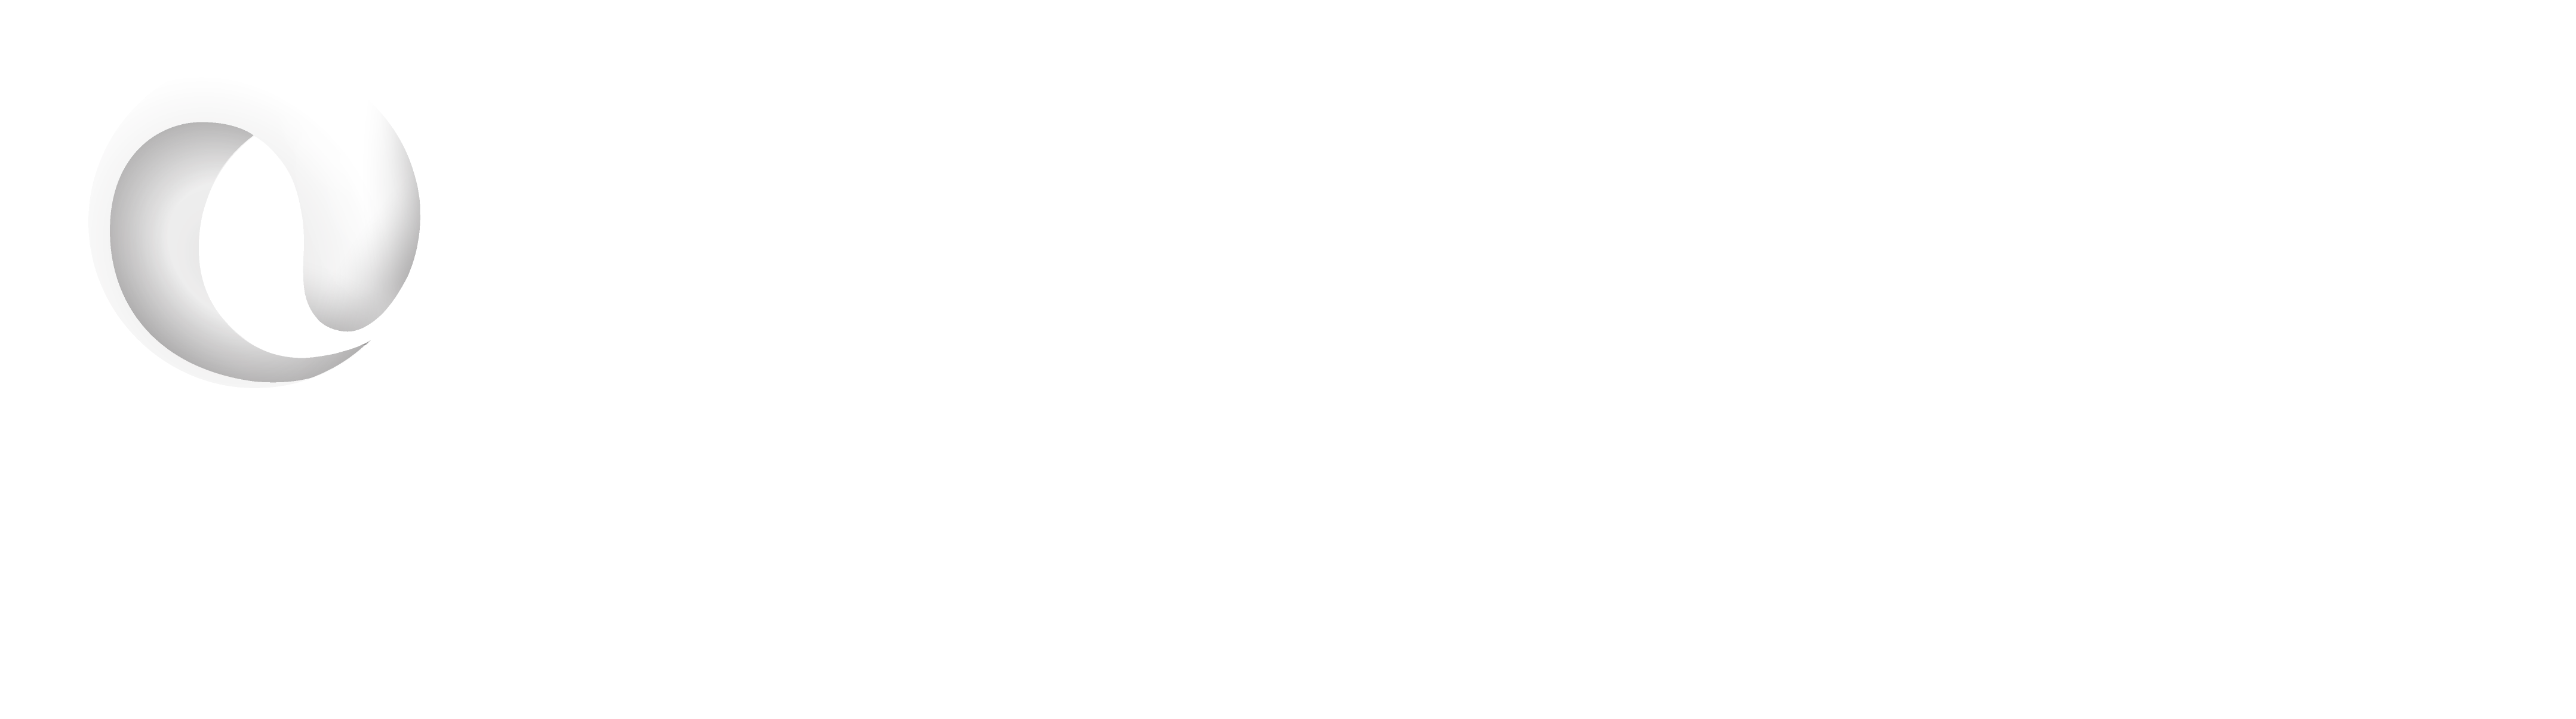 Credit One Property Finance logo